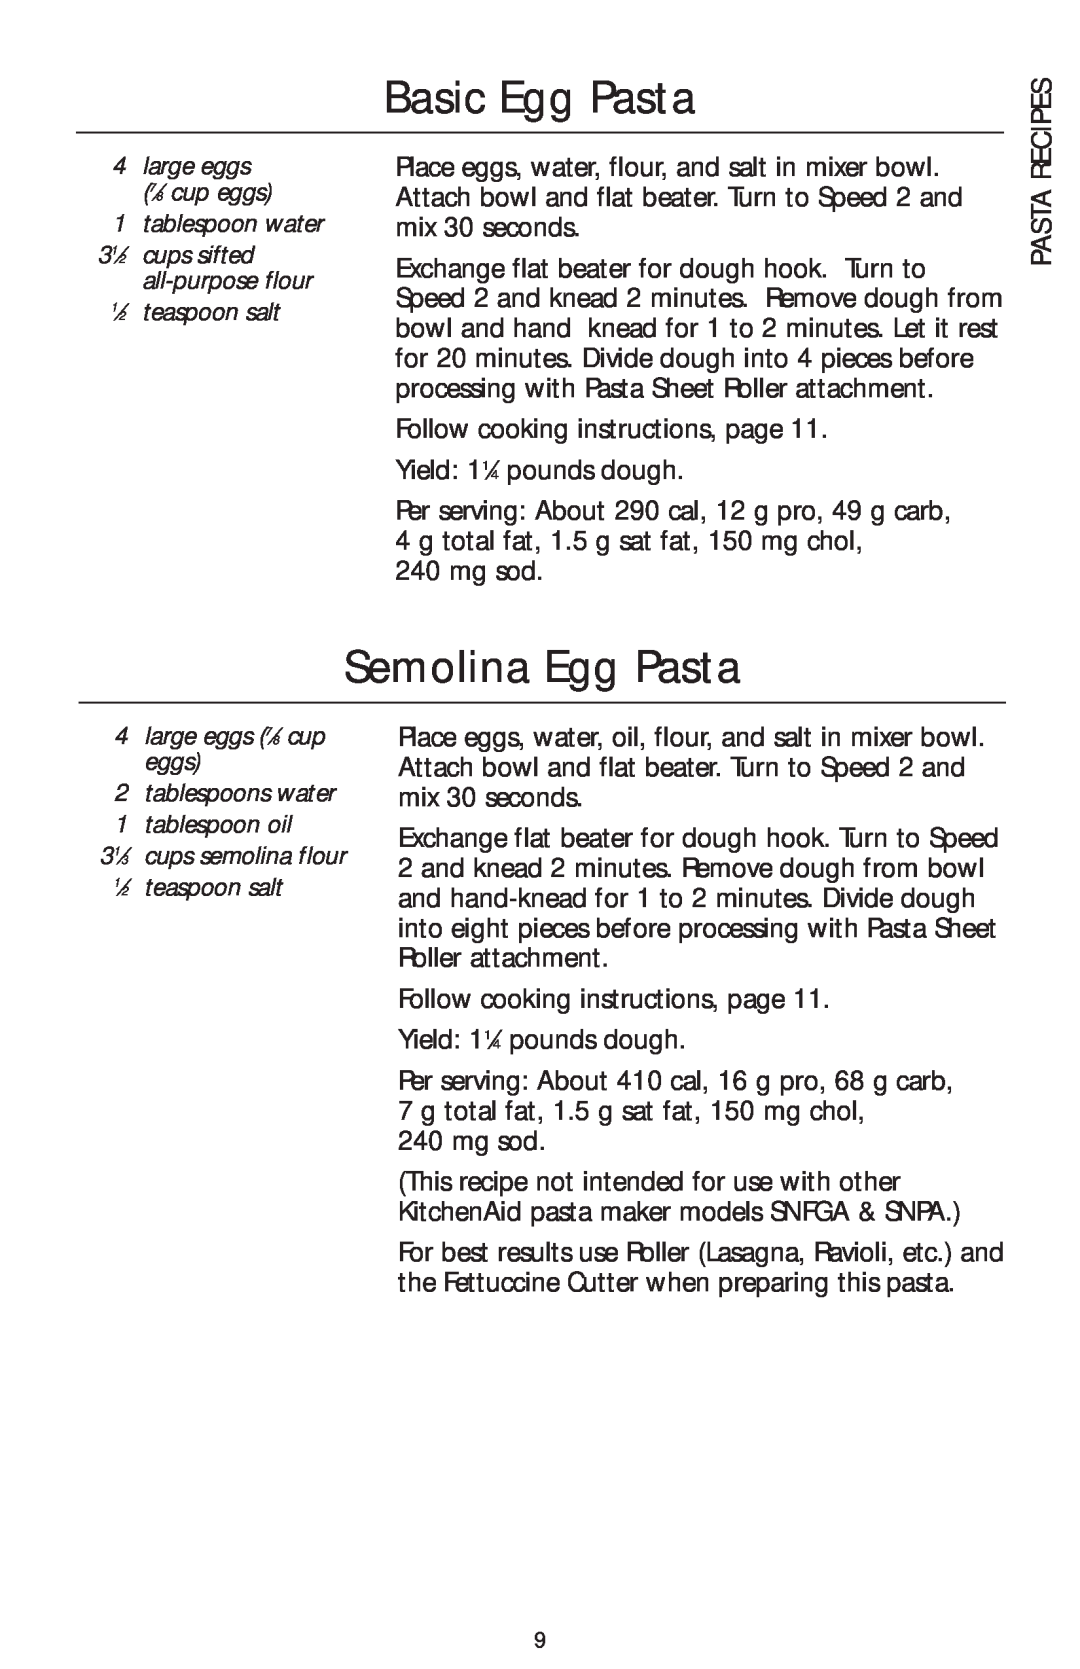 KitchenAid KPCA manual Basic Egg Pasta, Semolina Egg Pasta, Recipes 